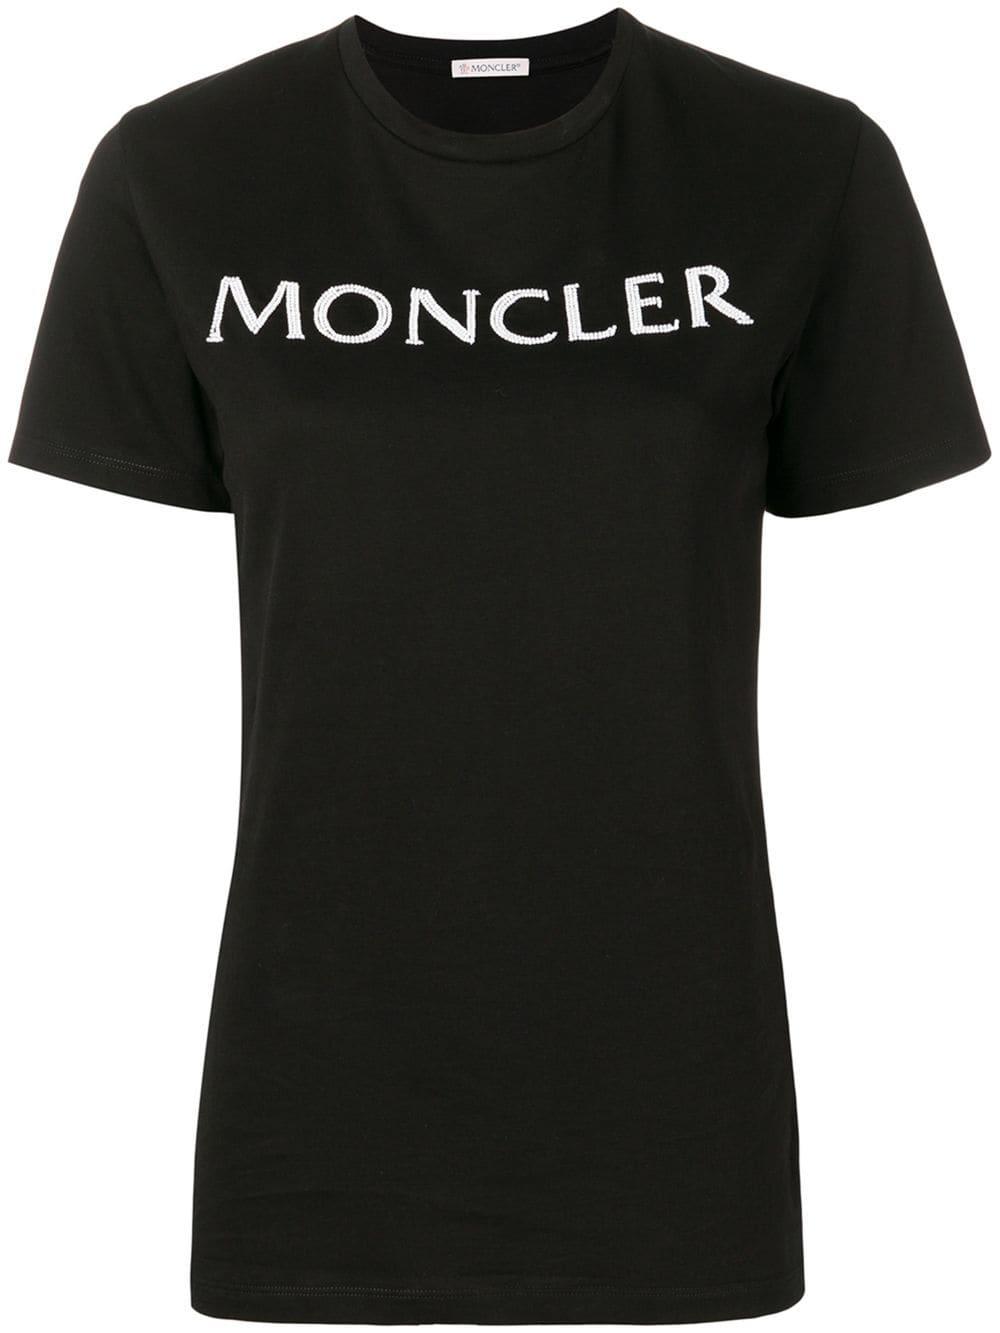 Lyst - Moncler Logo Print T-shirt in Black - Save 26%